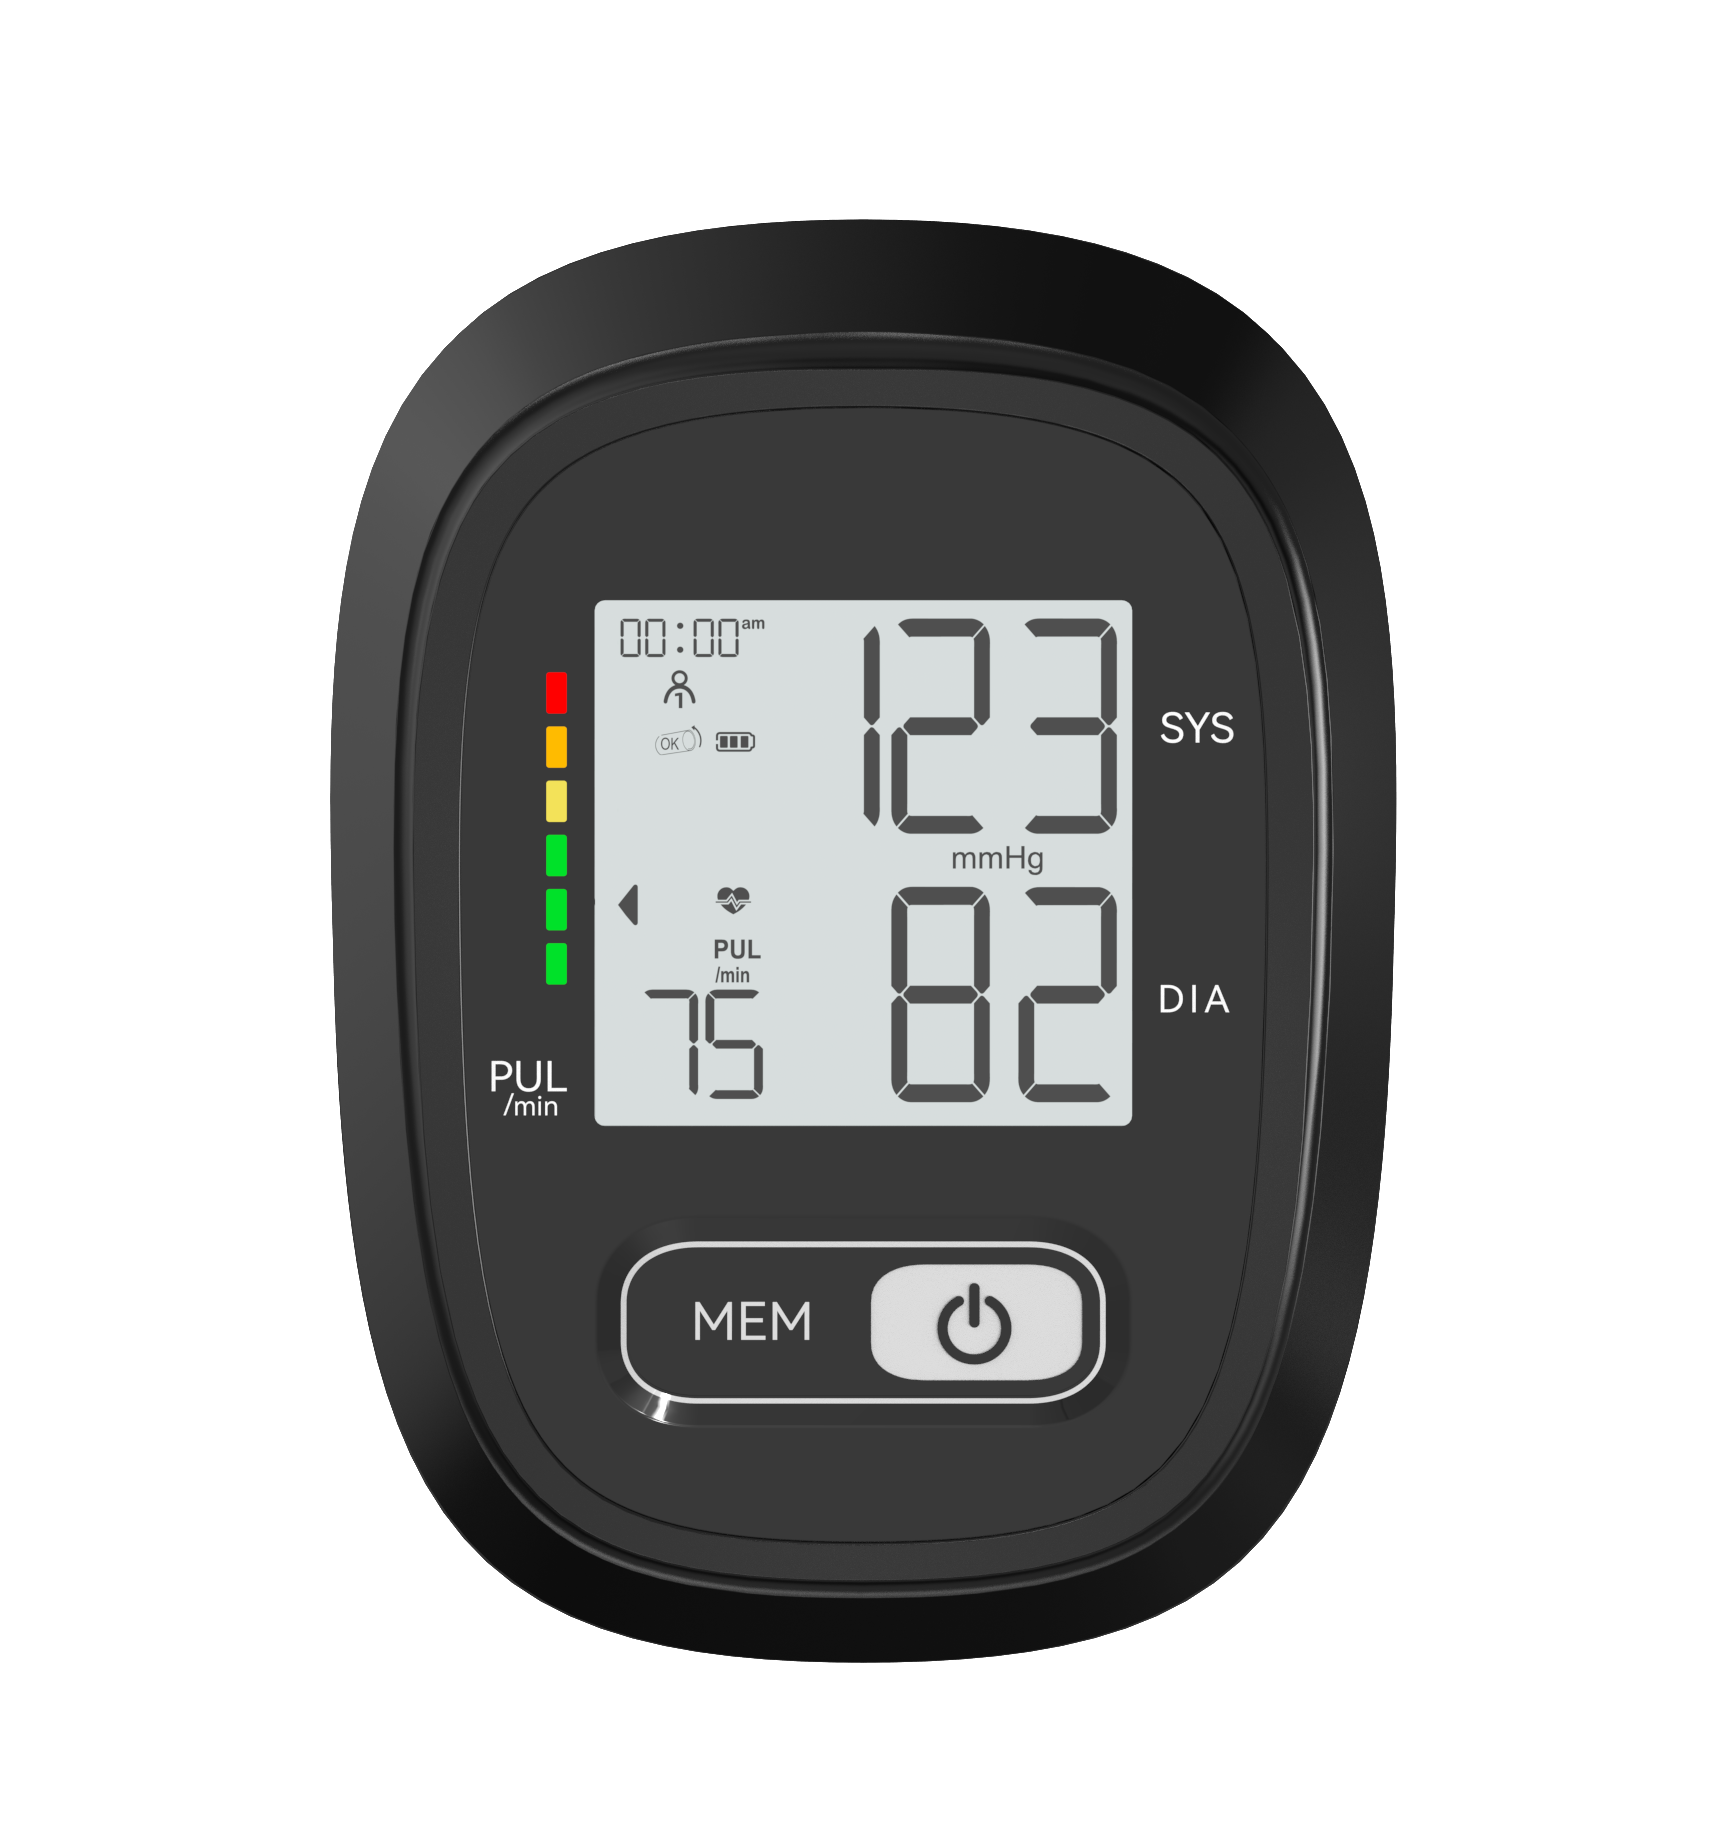 Tukma nga Medical Digital Upper Arm Blood Pressure Measuring Instrument